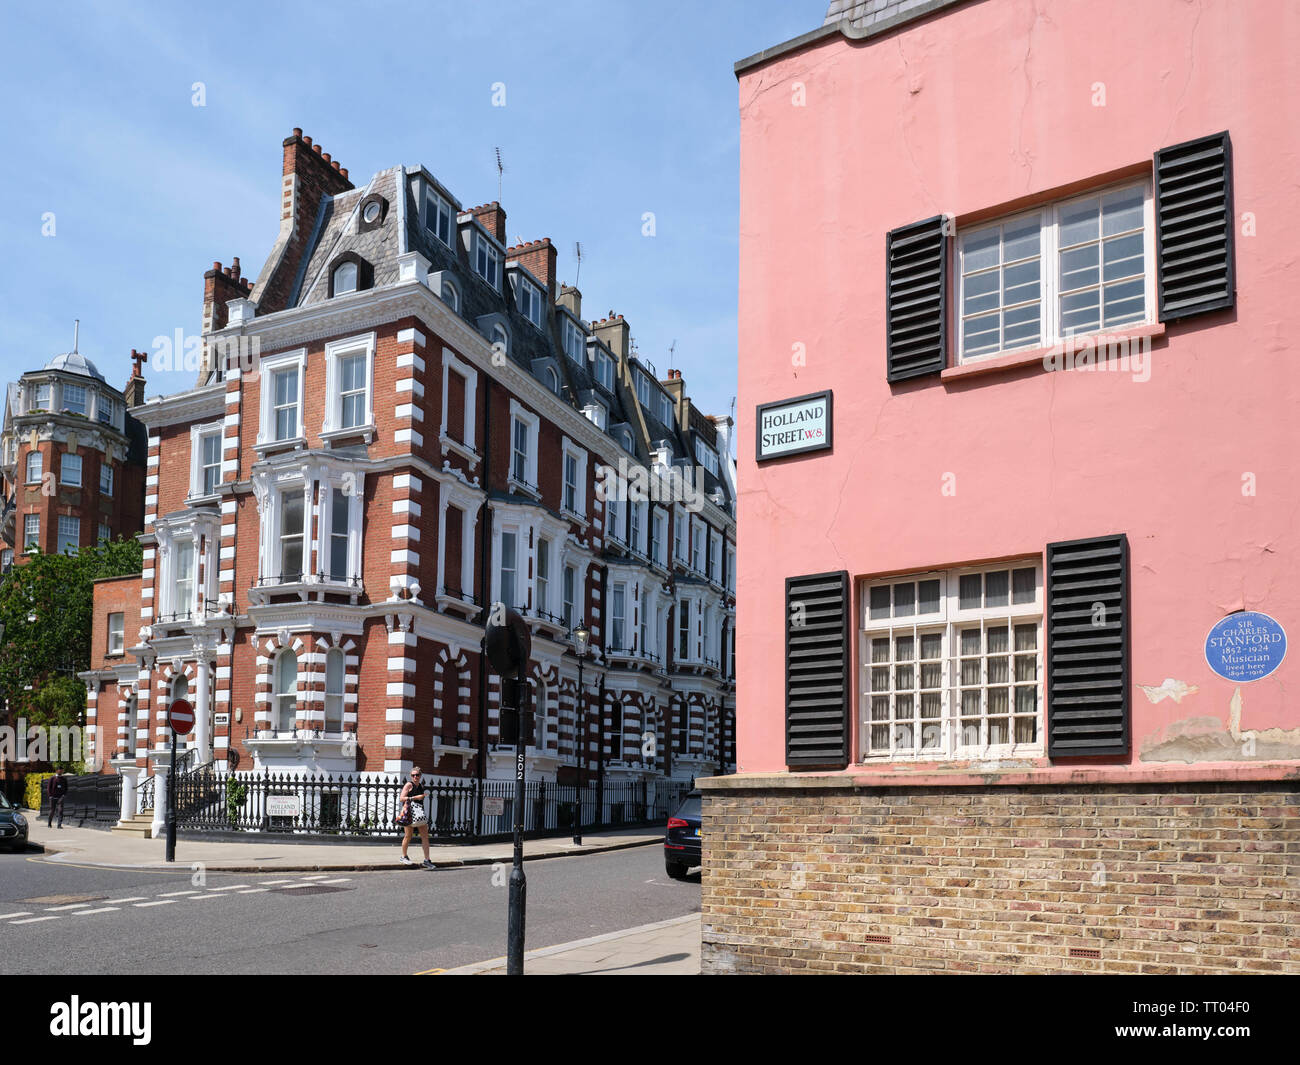 Examples of Georgian architecture in Kensington, London, England, UK. Stock Photo